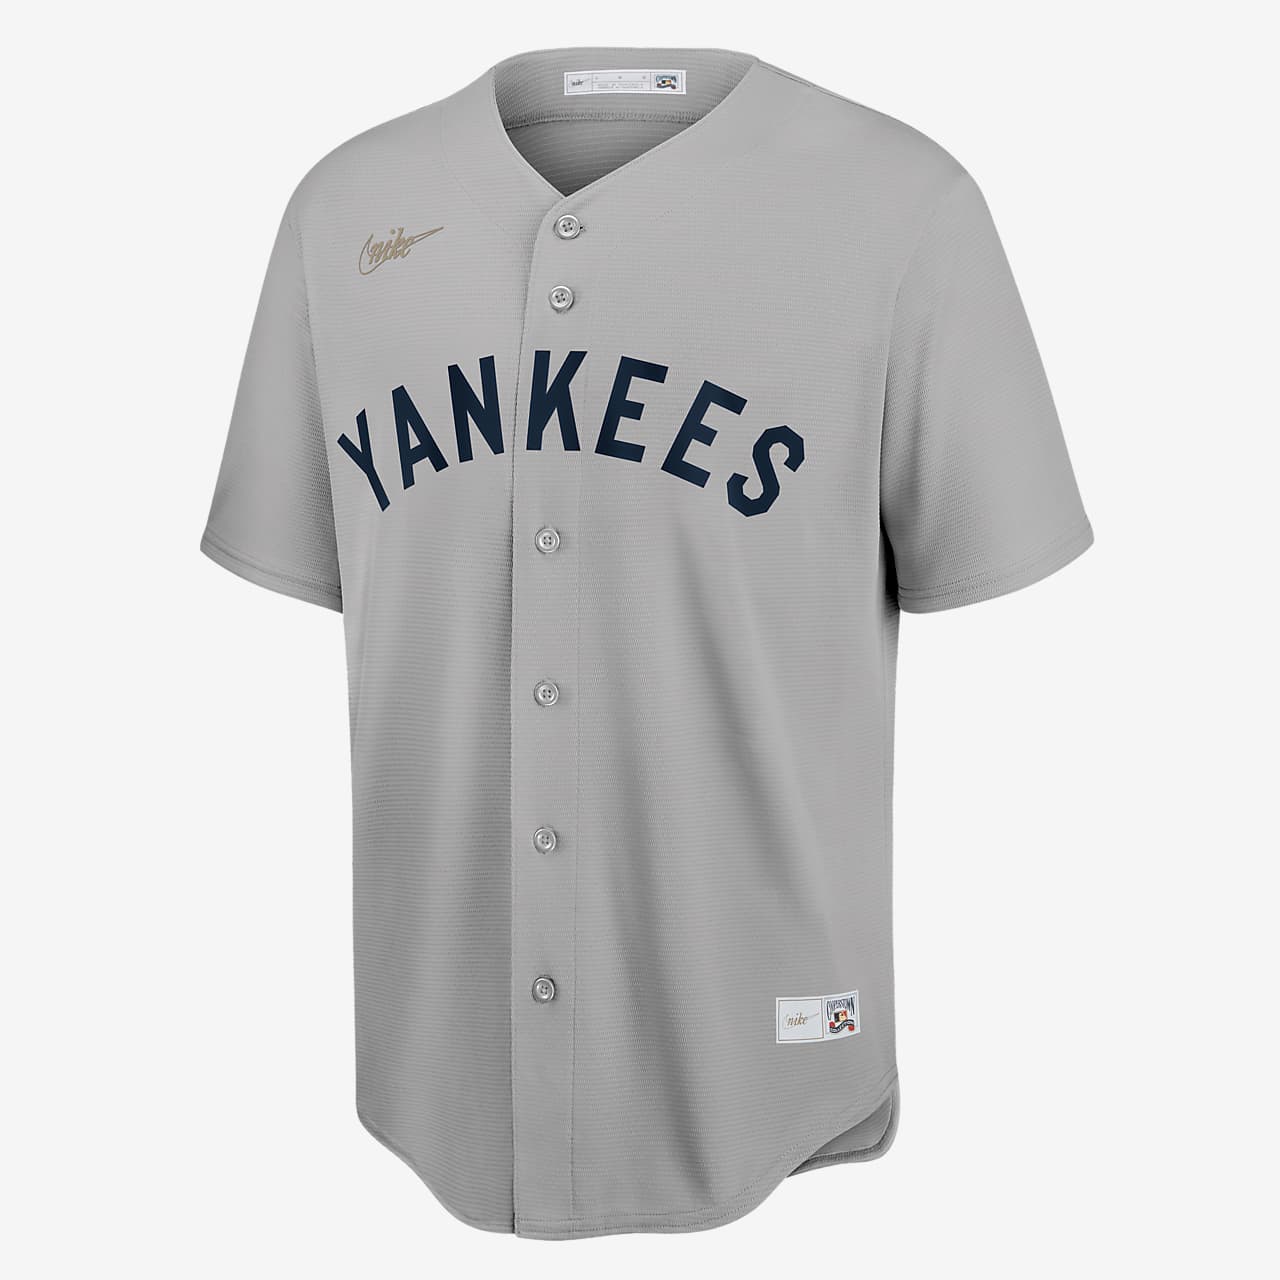 Hostal querido Médula ósea MLB New York Yankees (Babe Ruth) Men's Cooperstown Baseball Jersey. Nike.com